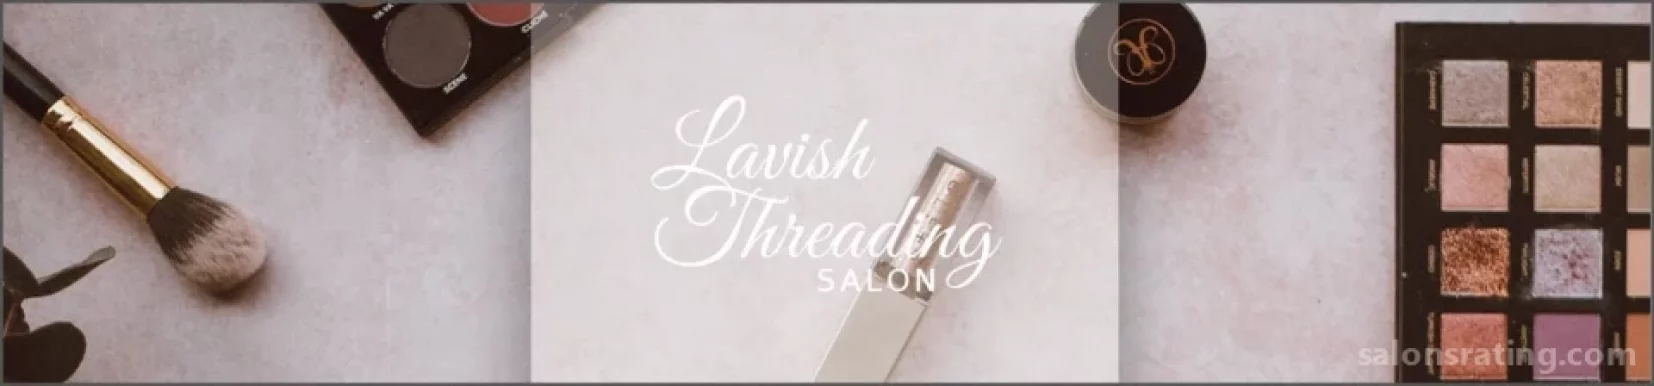 Lavish Threading Salon, New York City - Photo 2